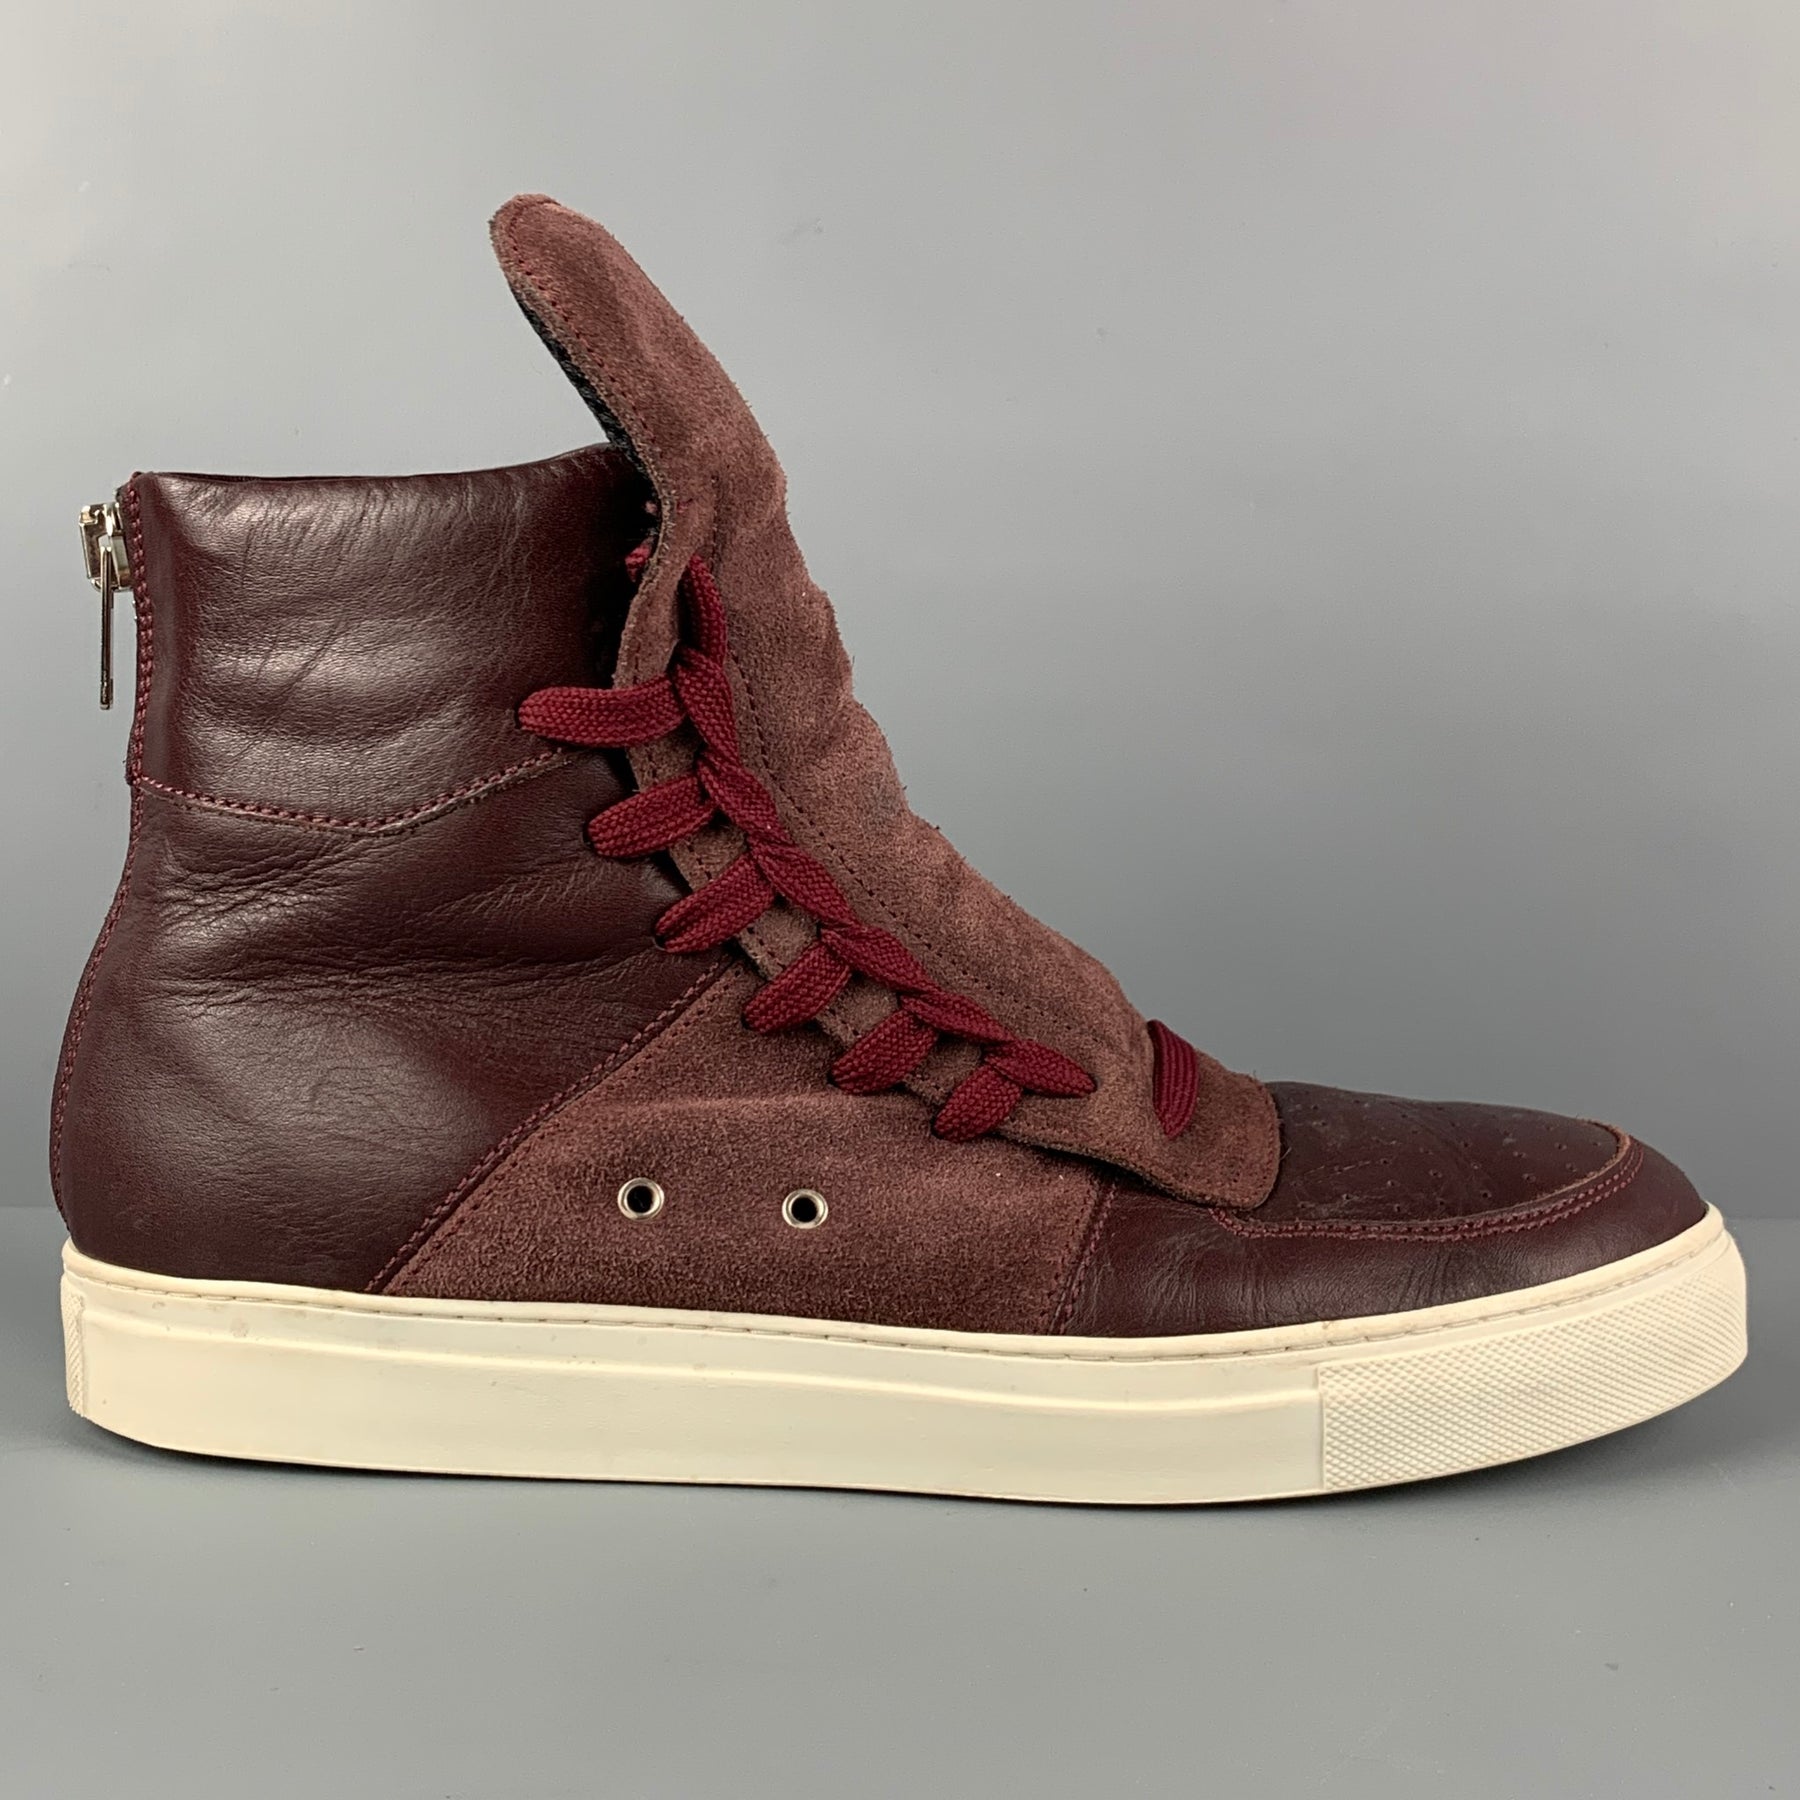 KRIS VAN Size 9 Burgundy Mixed Fabrics Leather Top Sneaker Sui Generis Designer Consignment